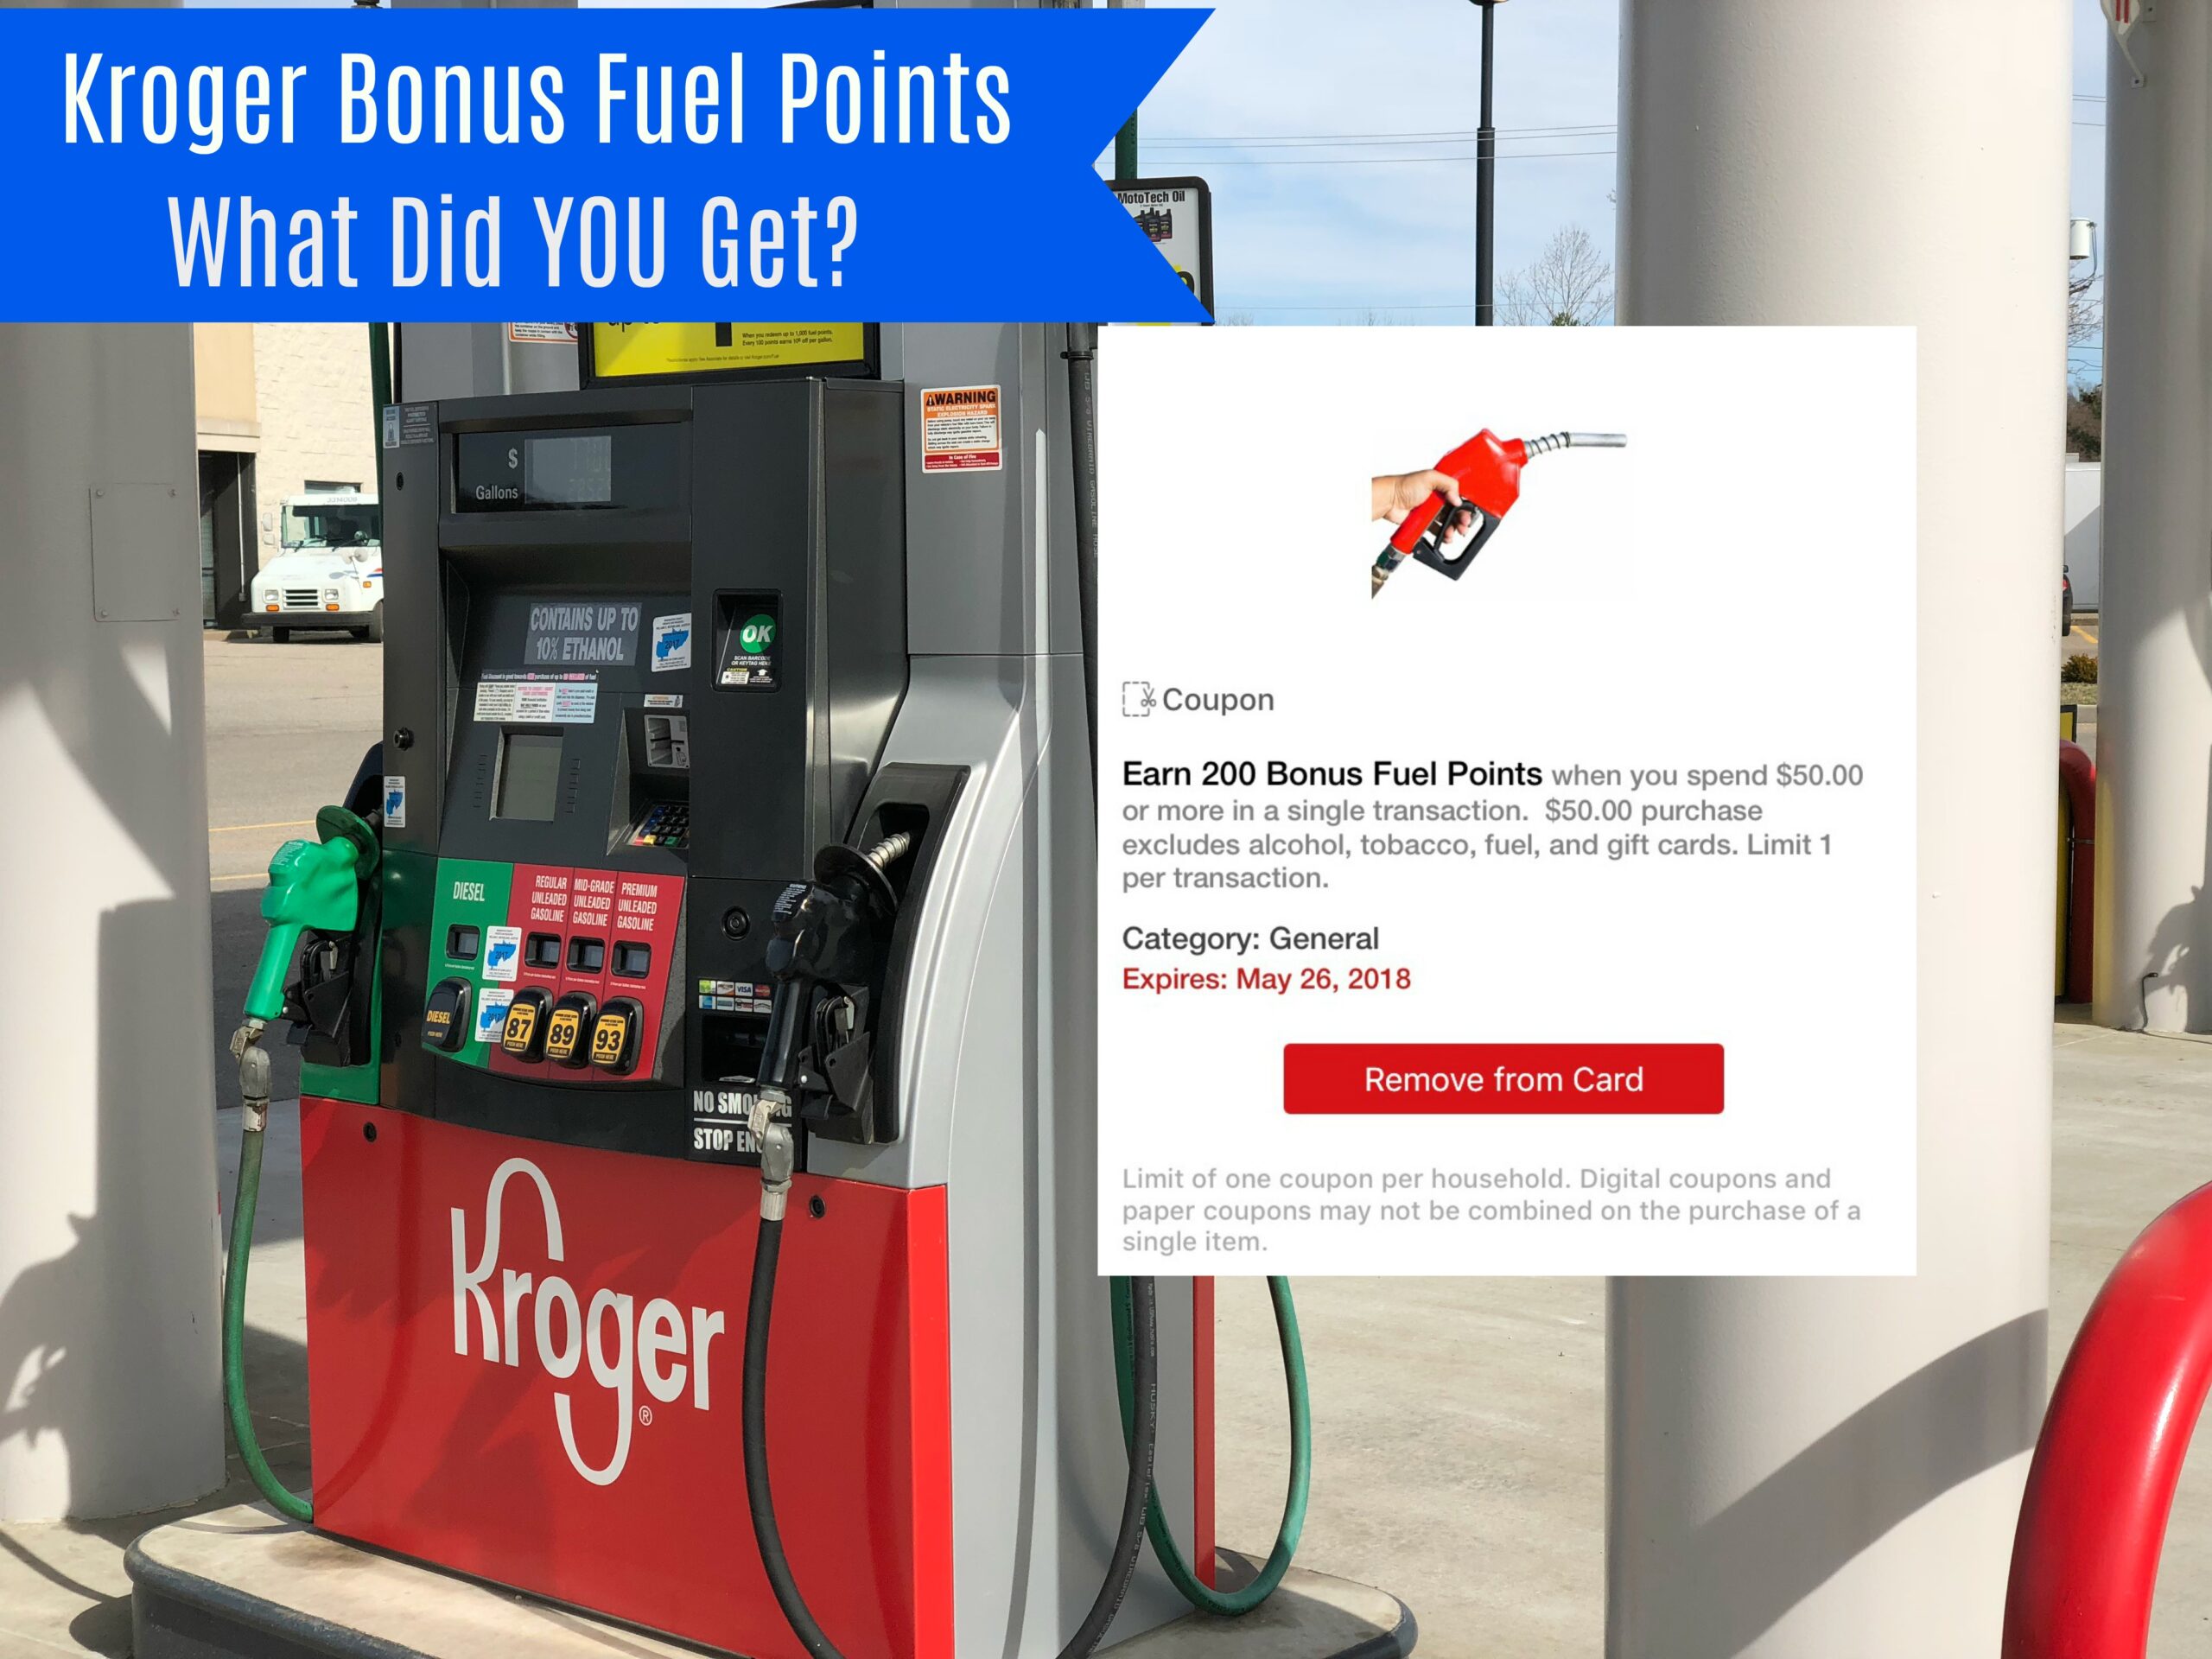 Kroger Bonus Fuel Points I Got 200 Points for Spending 50.00